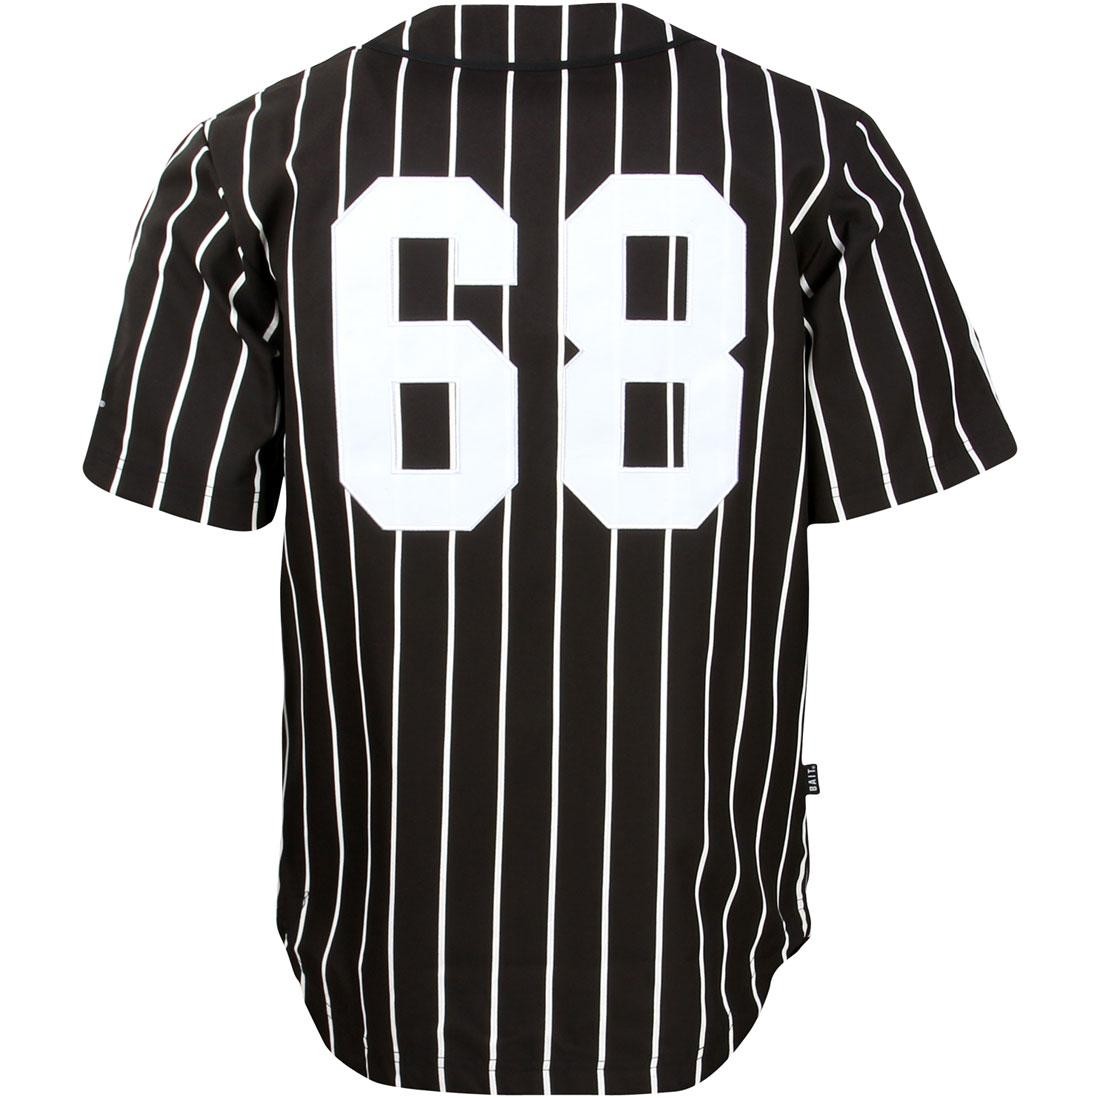 black and white pinstripe baseball jersey